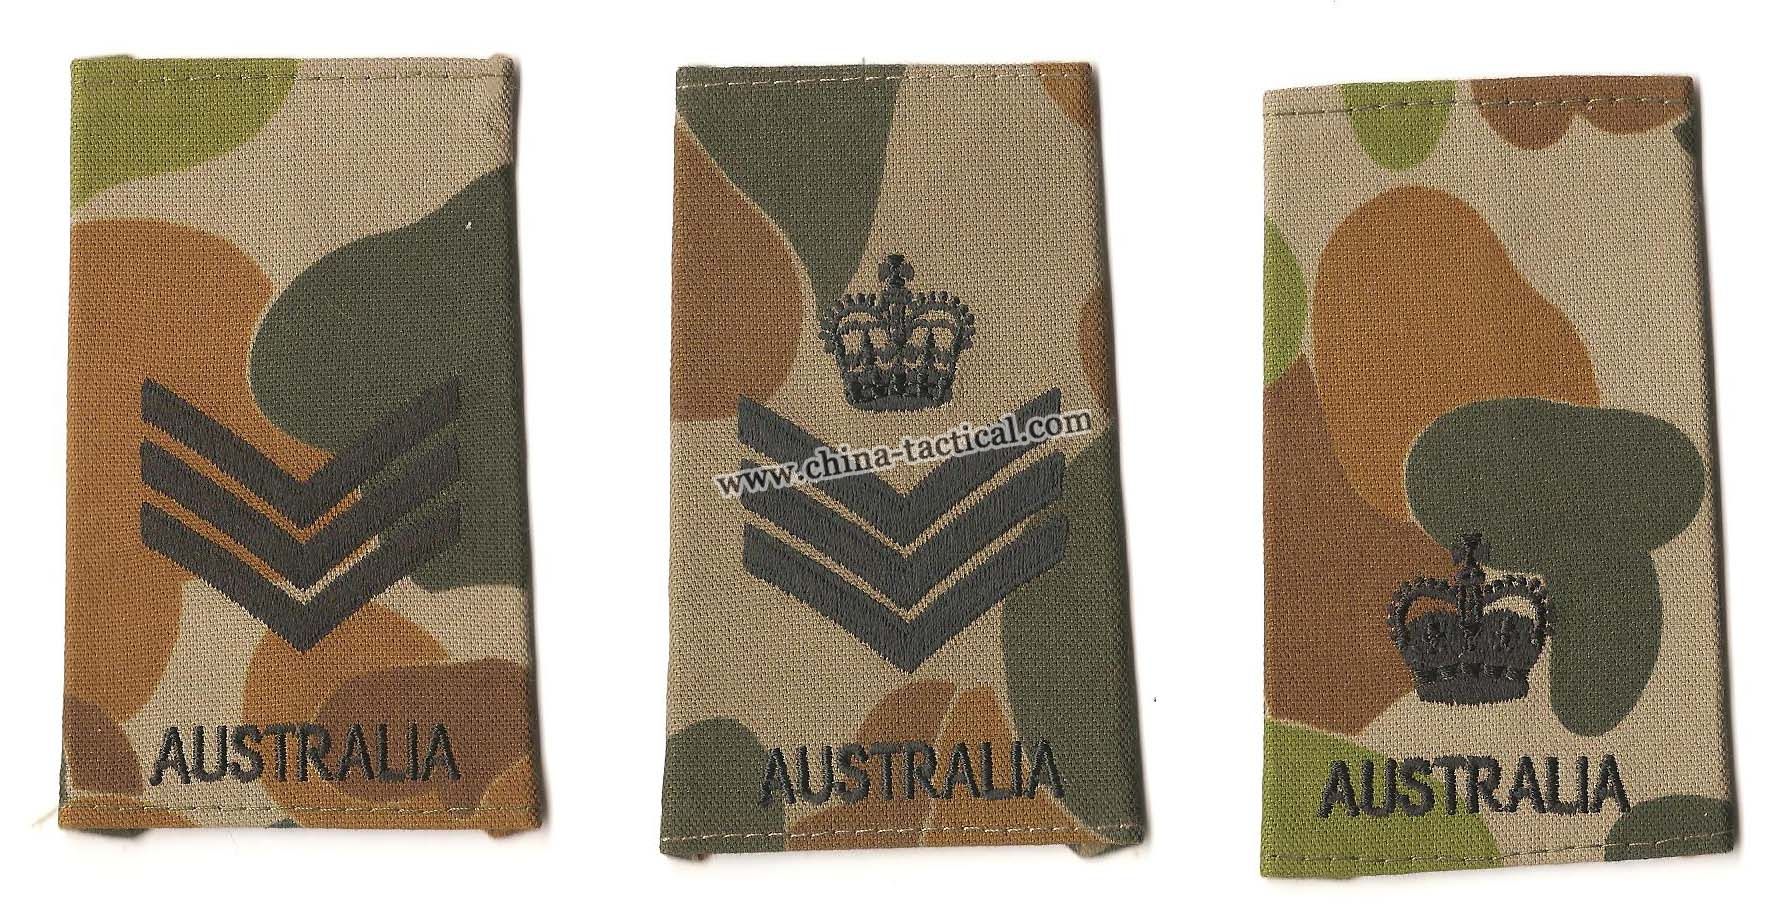 Australia camo rank slid-embroidery dinosaur patch-embroidery patch-Auscam camo-Auscam fabric-Auscam Rand slid, 63A83